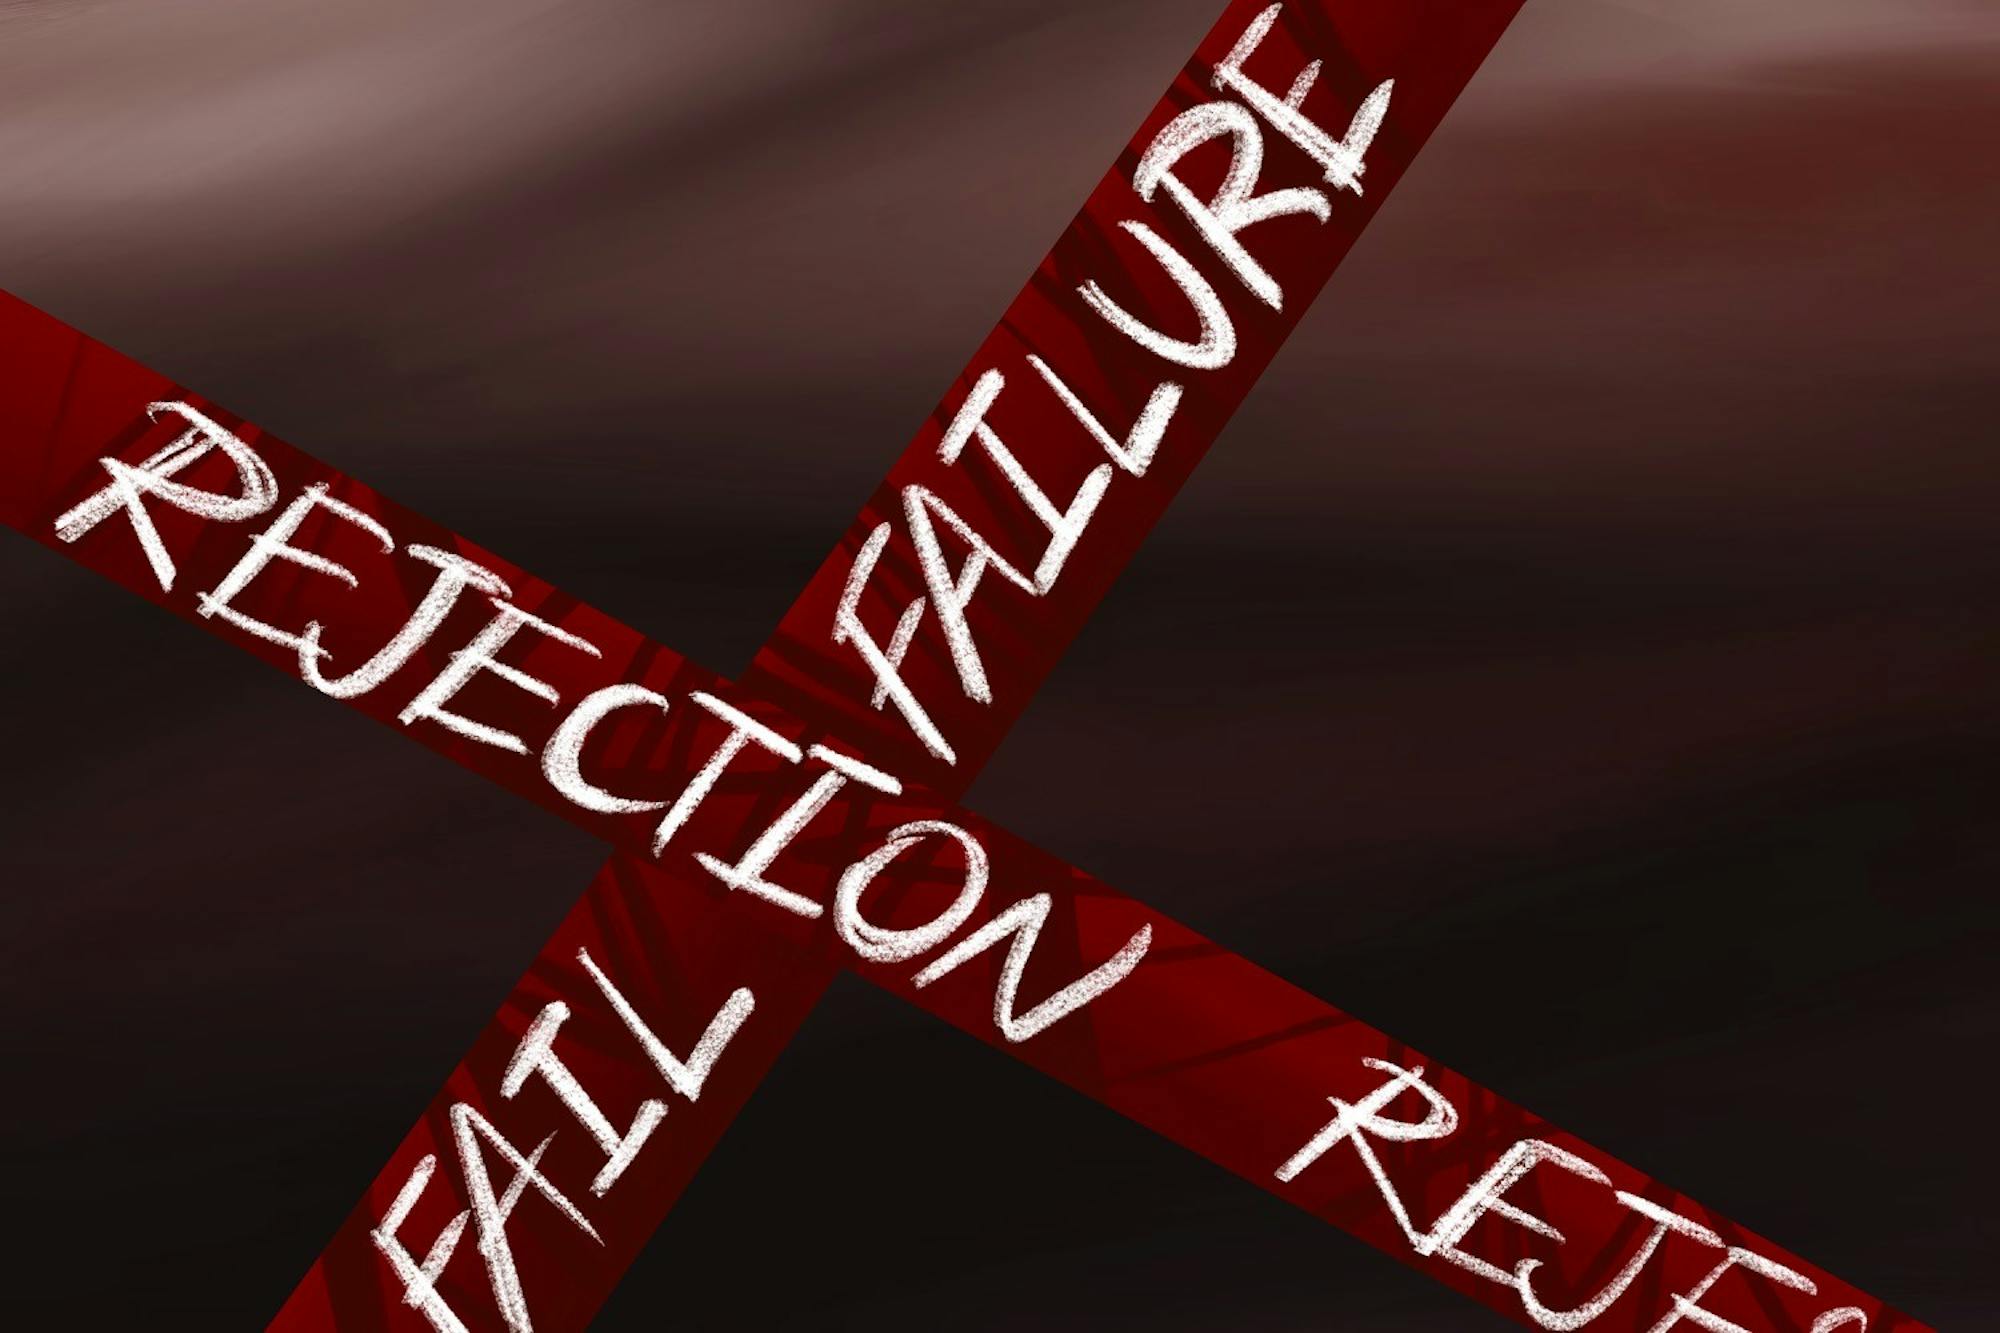 rejection_failure.JPG